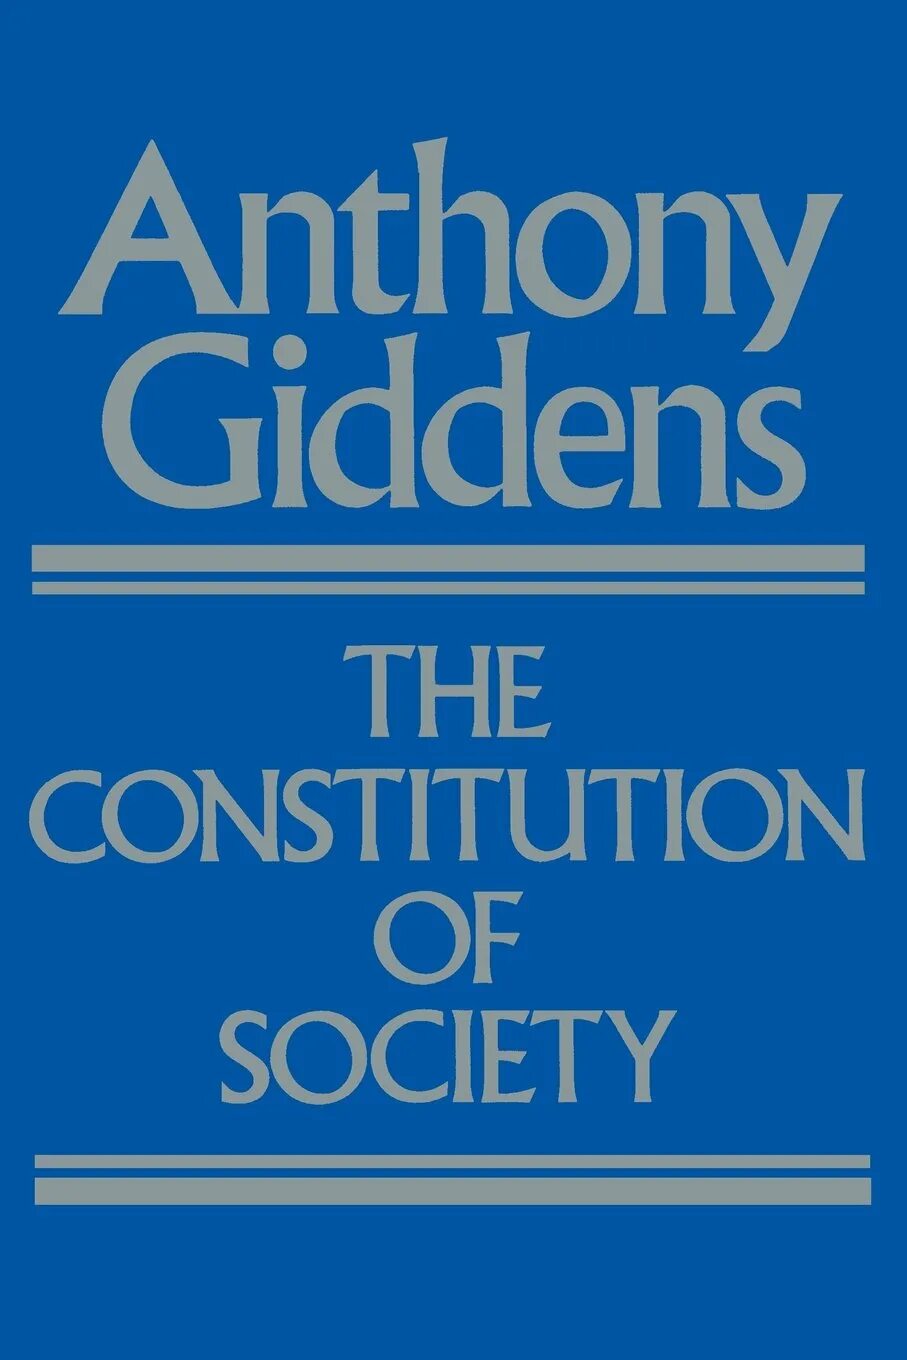 Anthony Giddens. Гидденс книги. Энтони Гидденс книги. Гидденс право книга.